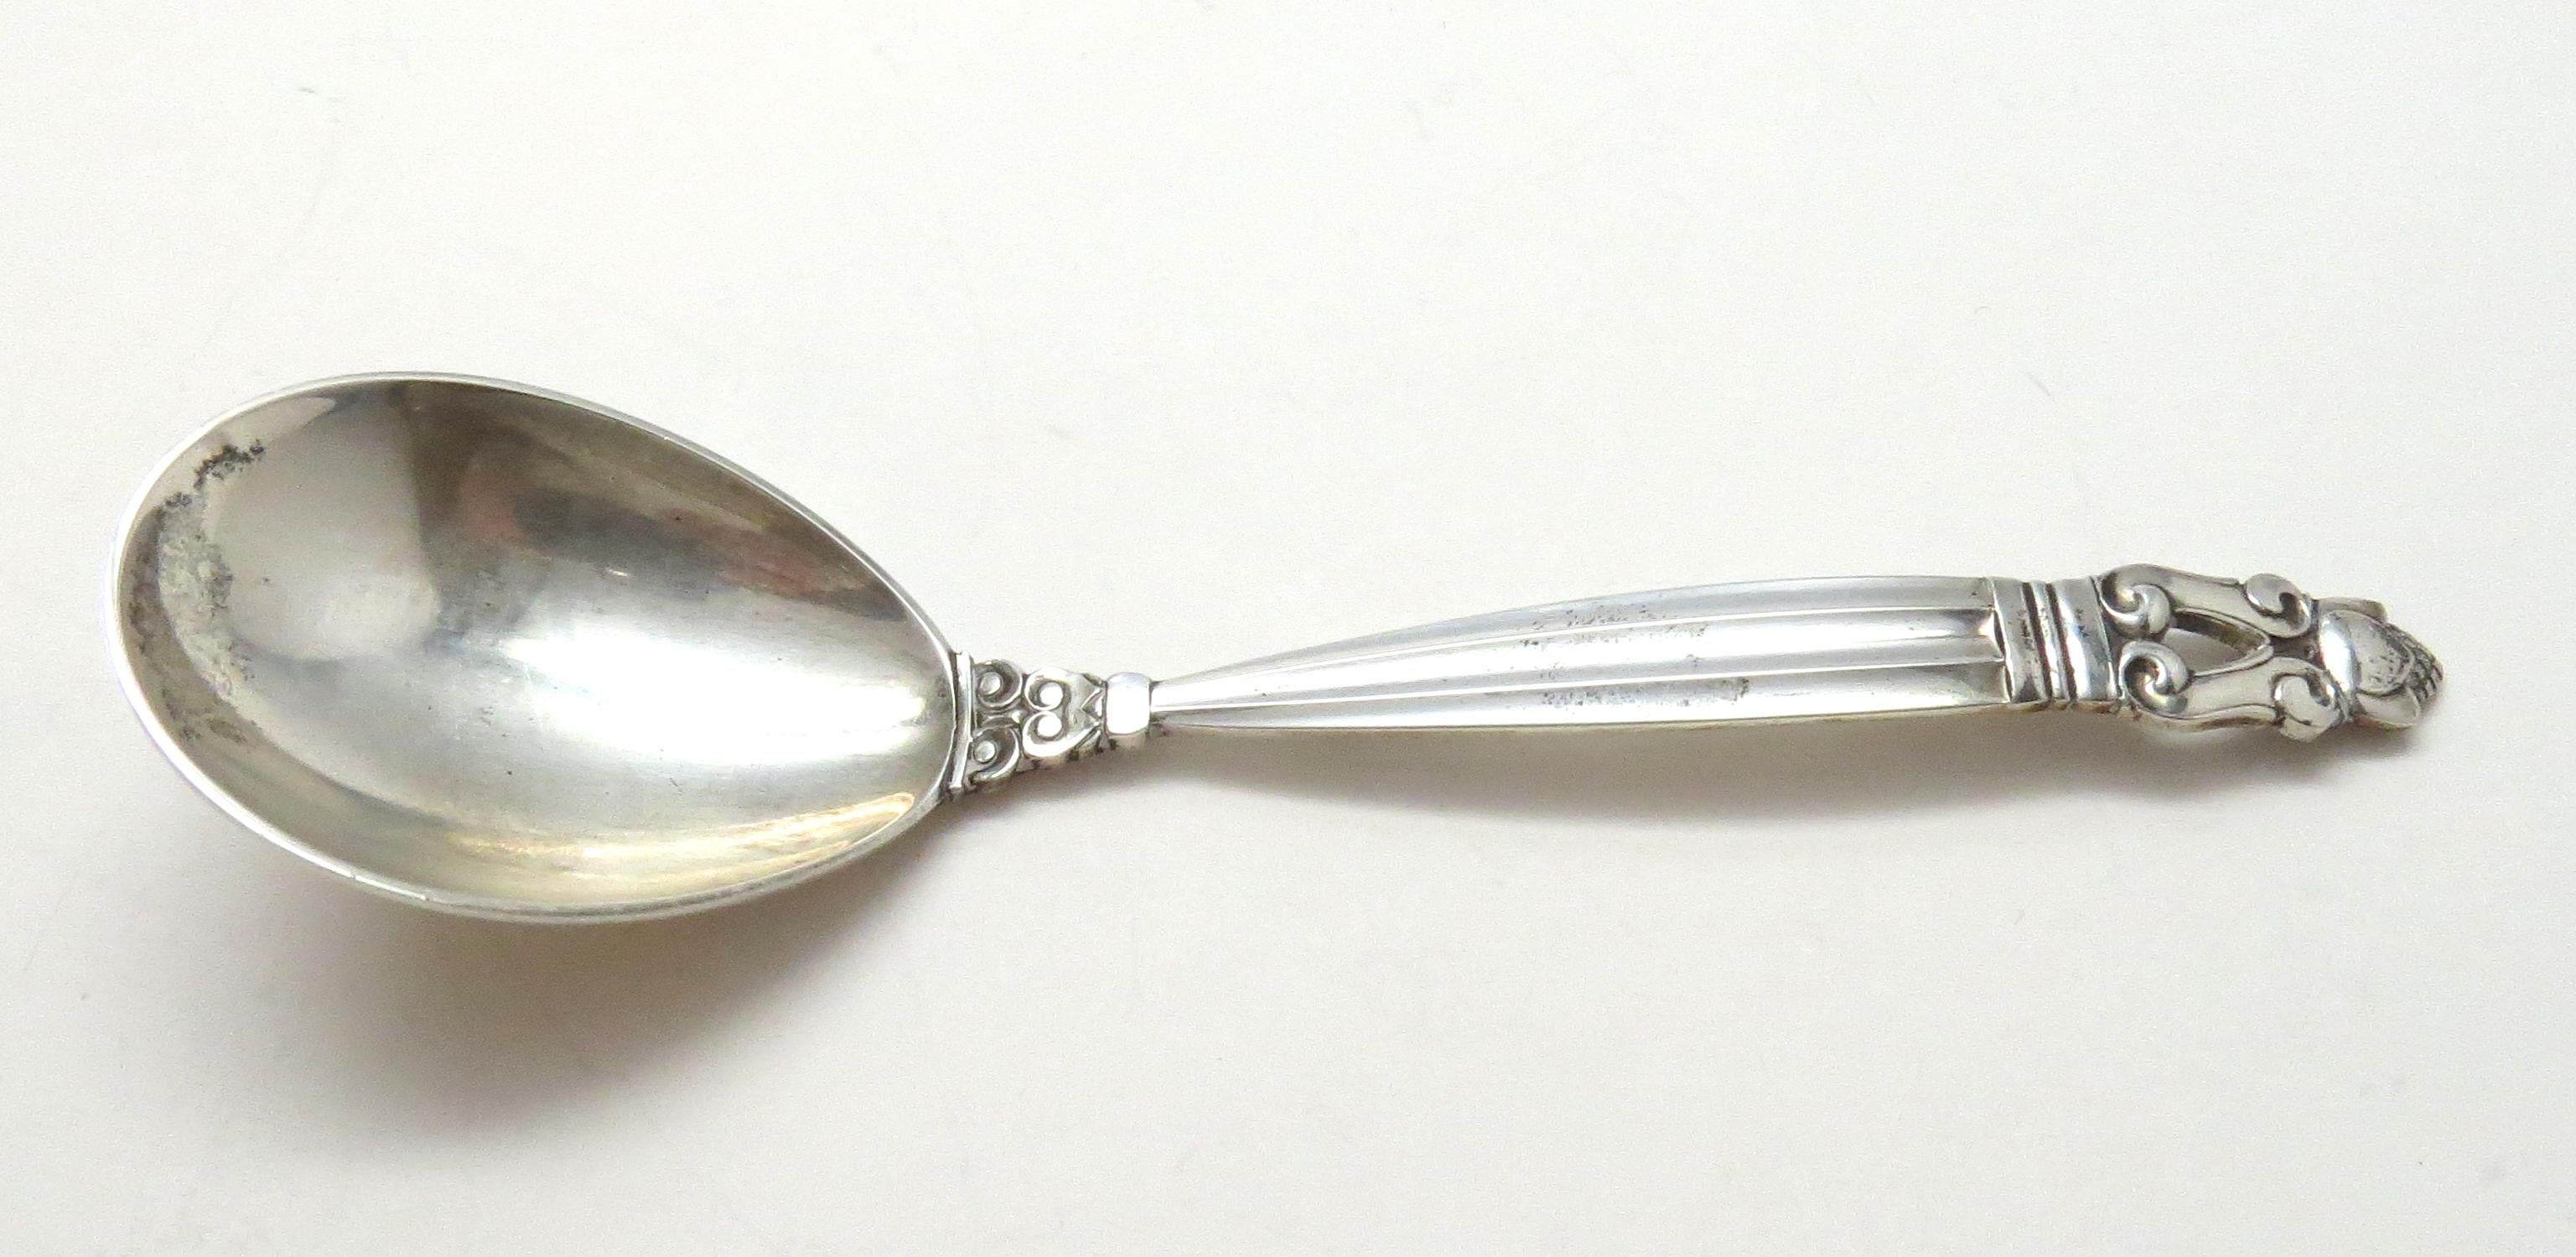 Georg Jensen Denmark sterling silver curved handle jam spoon in the acorn pattern.
Marked: Georg Jensen in dotted circle.
Sterling, Denmark.
No monogram.
Measures: 5 3/4